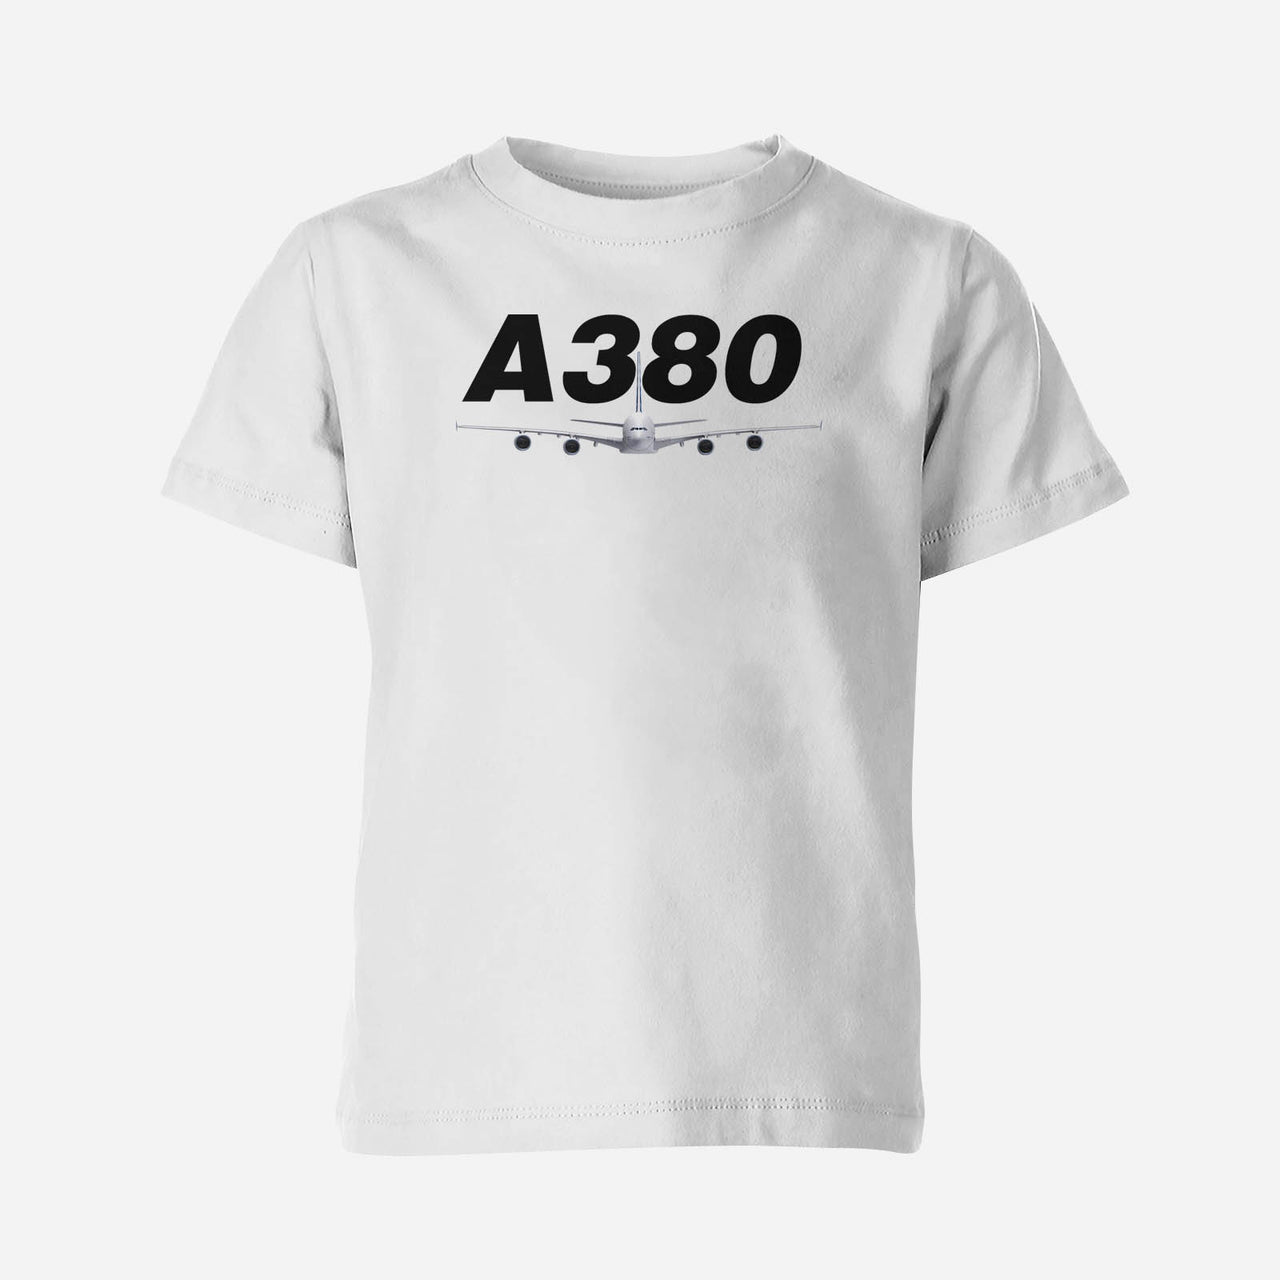 Super Airbus A380 Designed Children T-Shirts